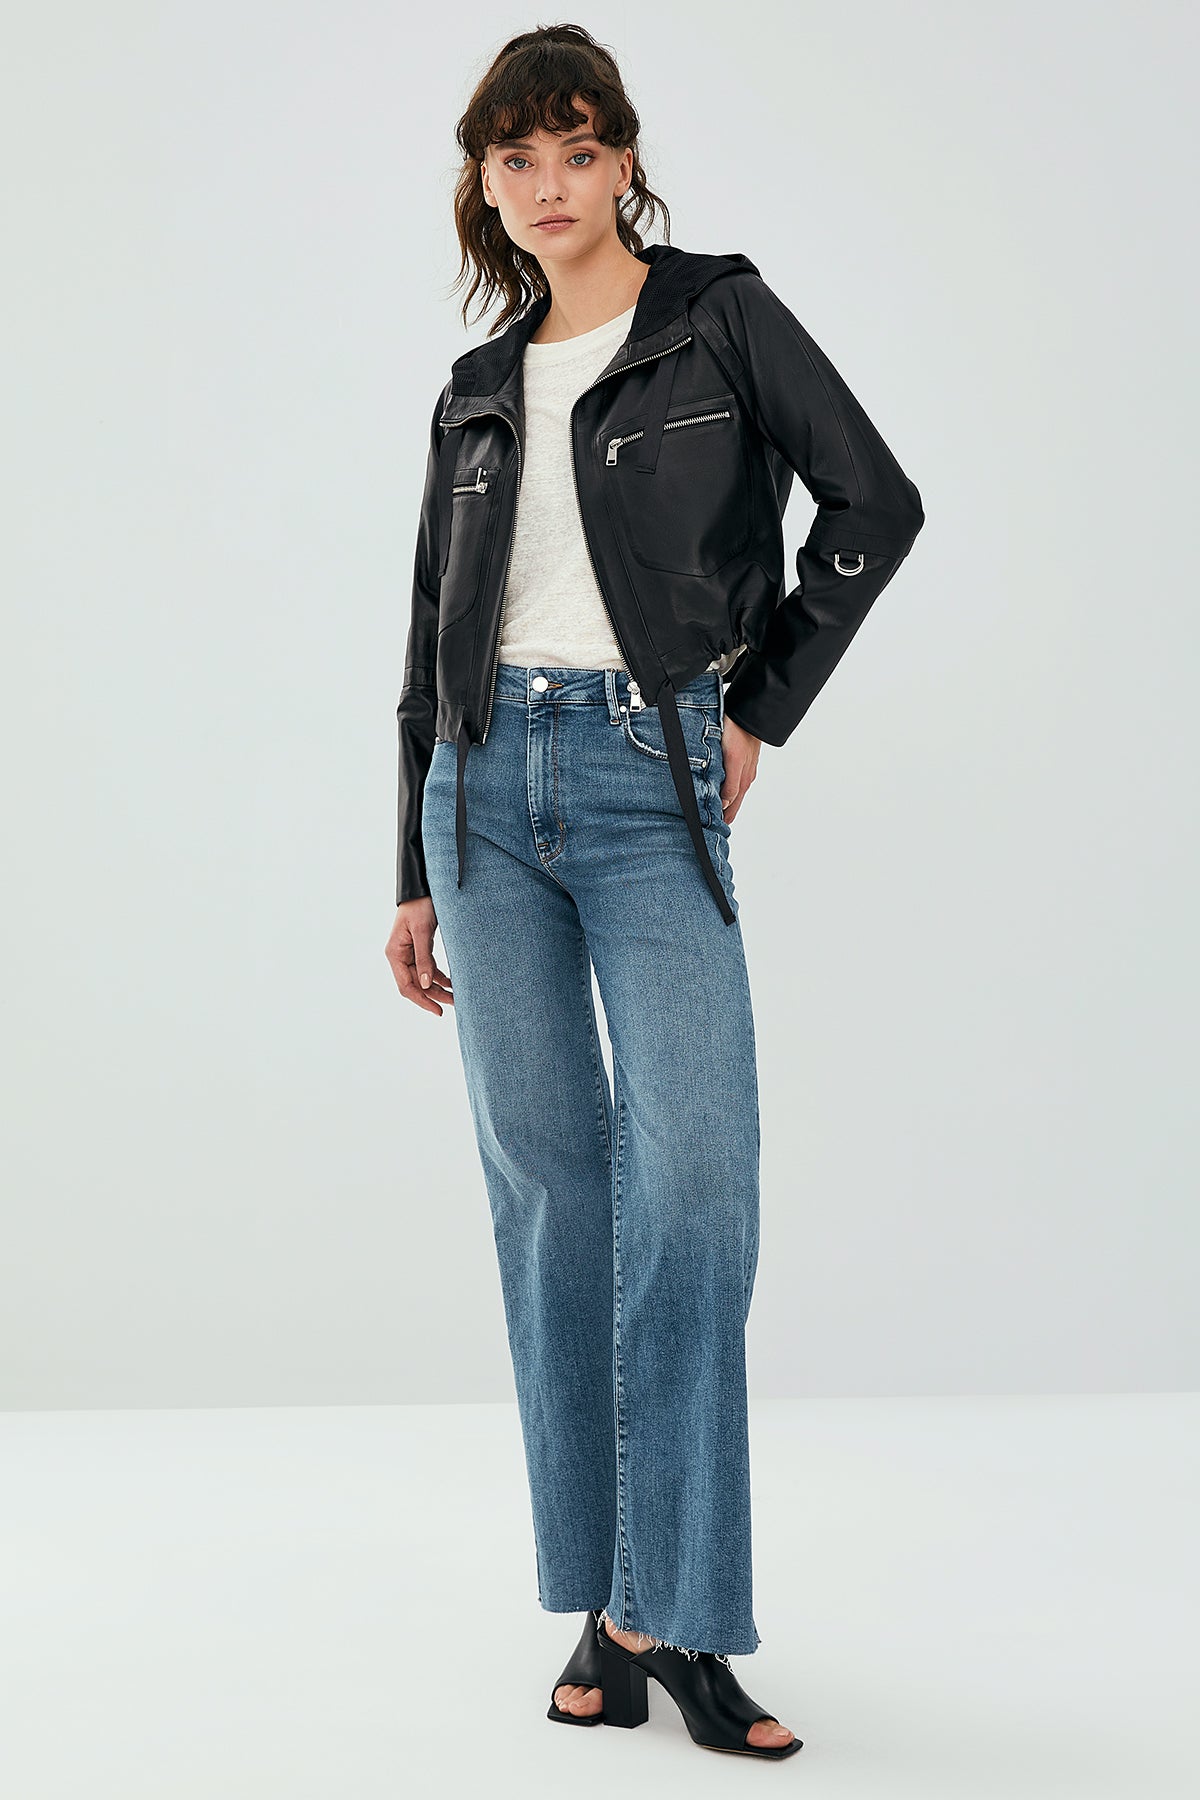 Stella Women's Black Hooded Short Leather Jacket